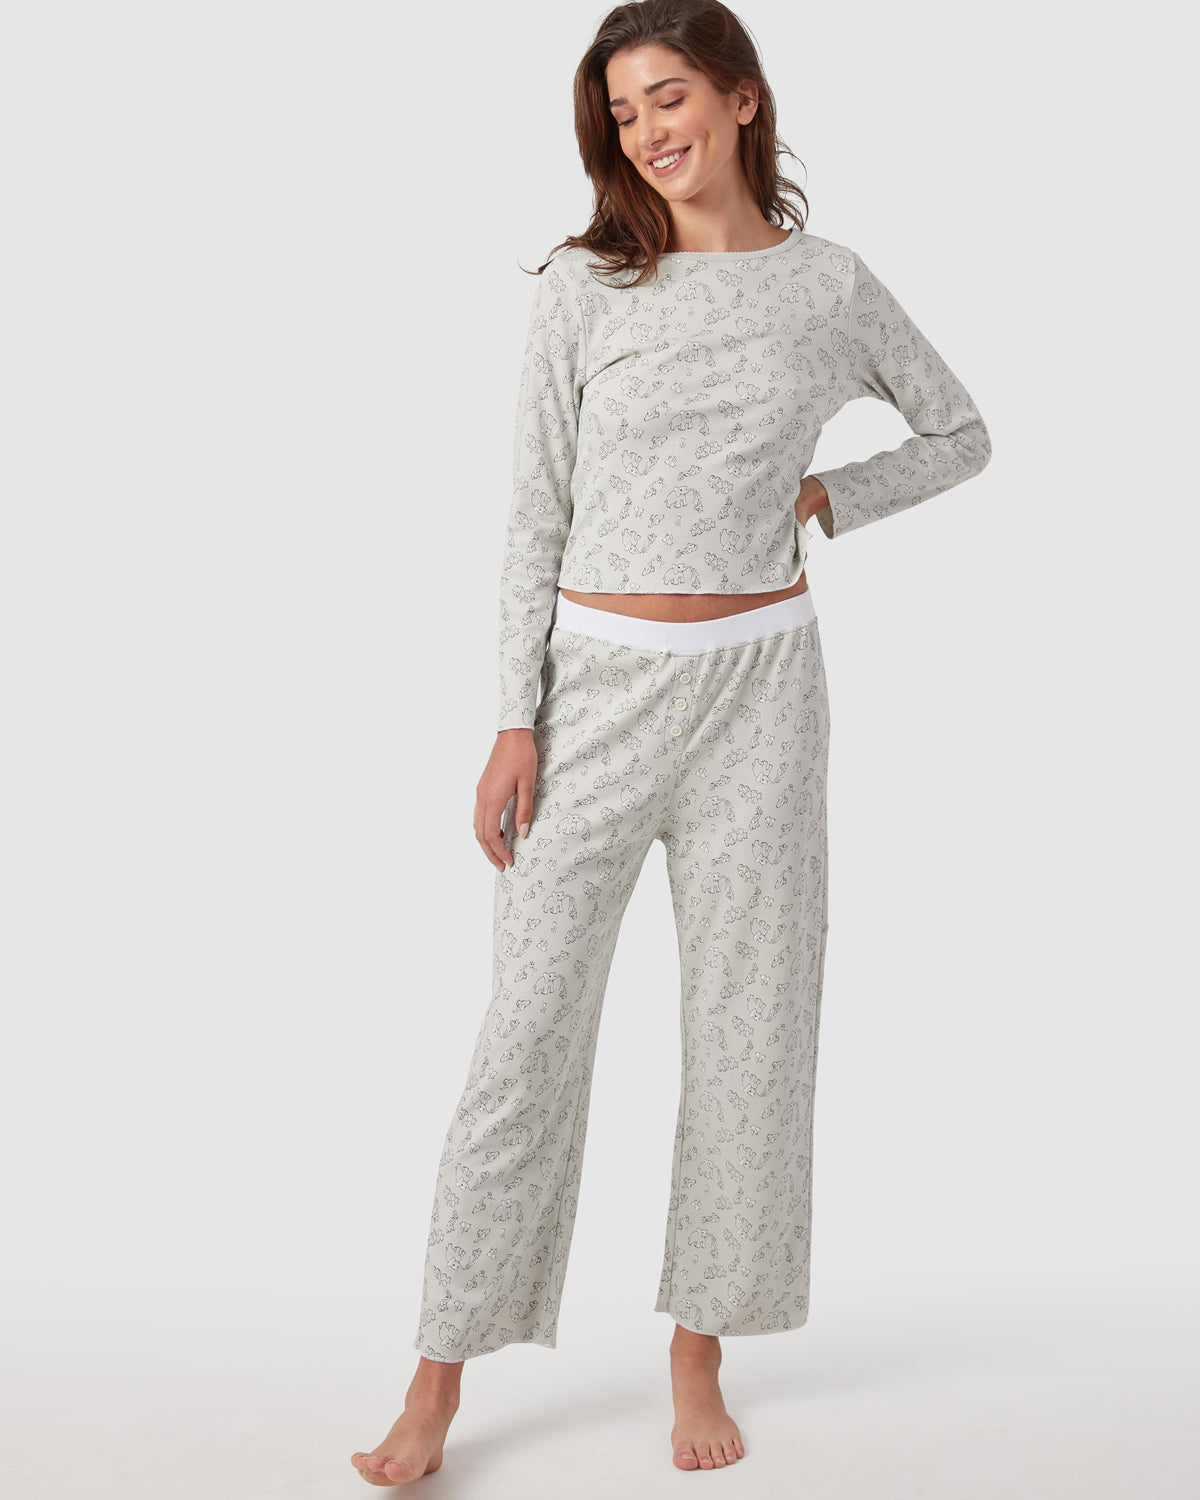 Women's pajamas, Explore our New Arrivals